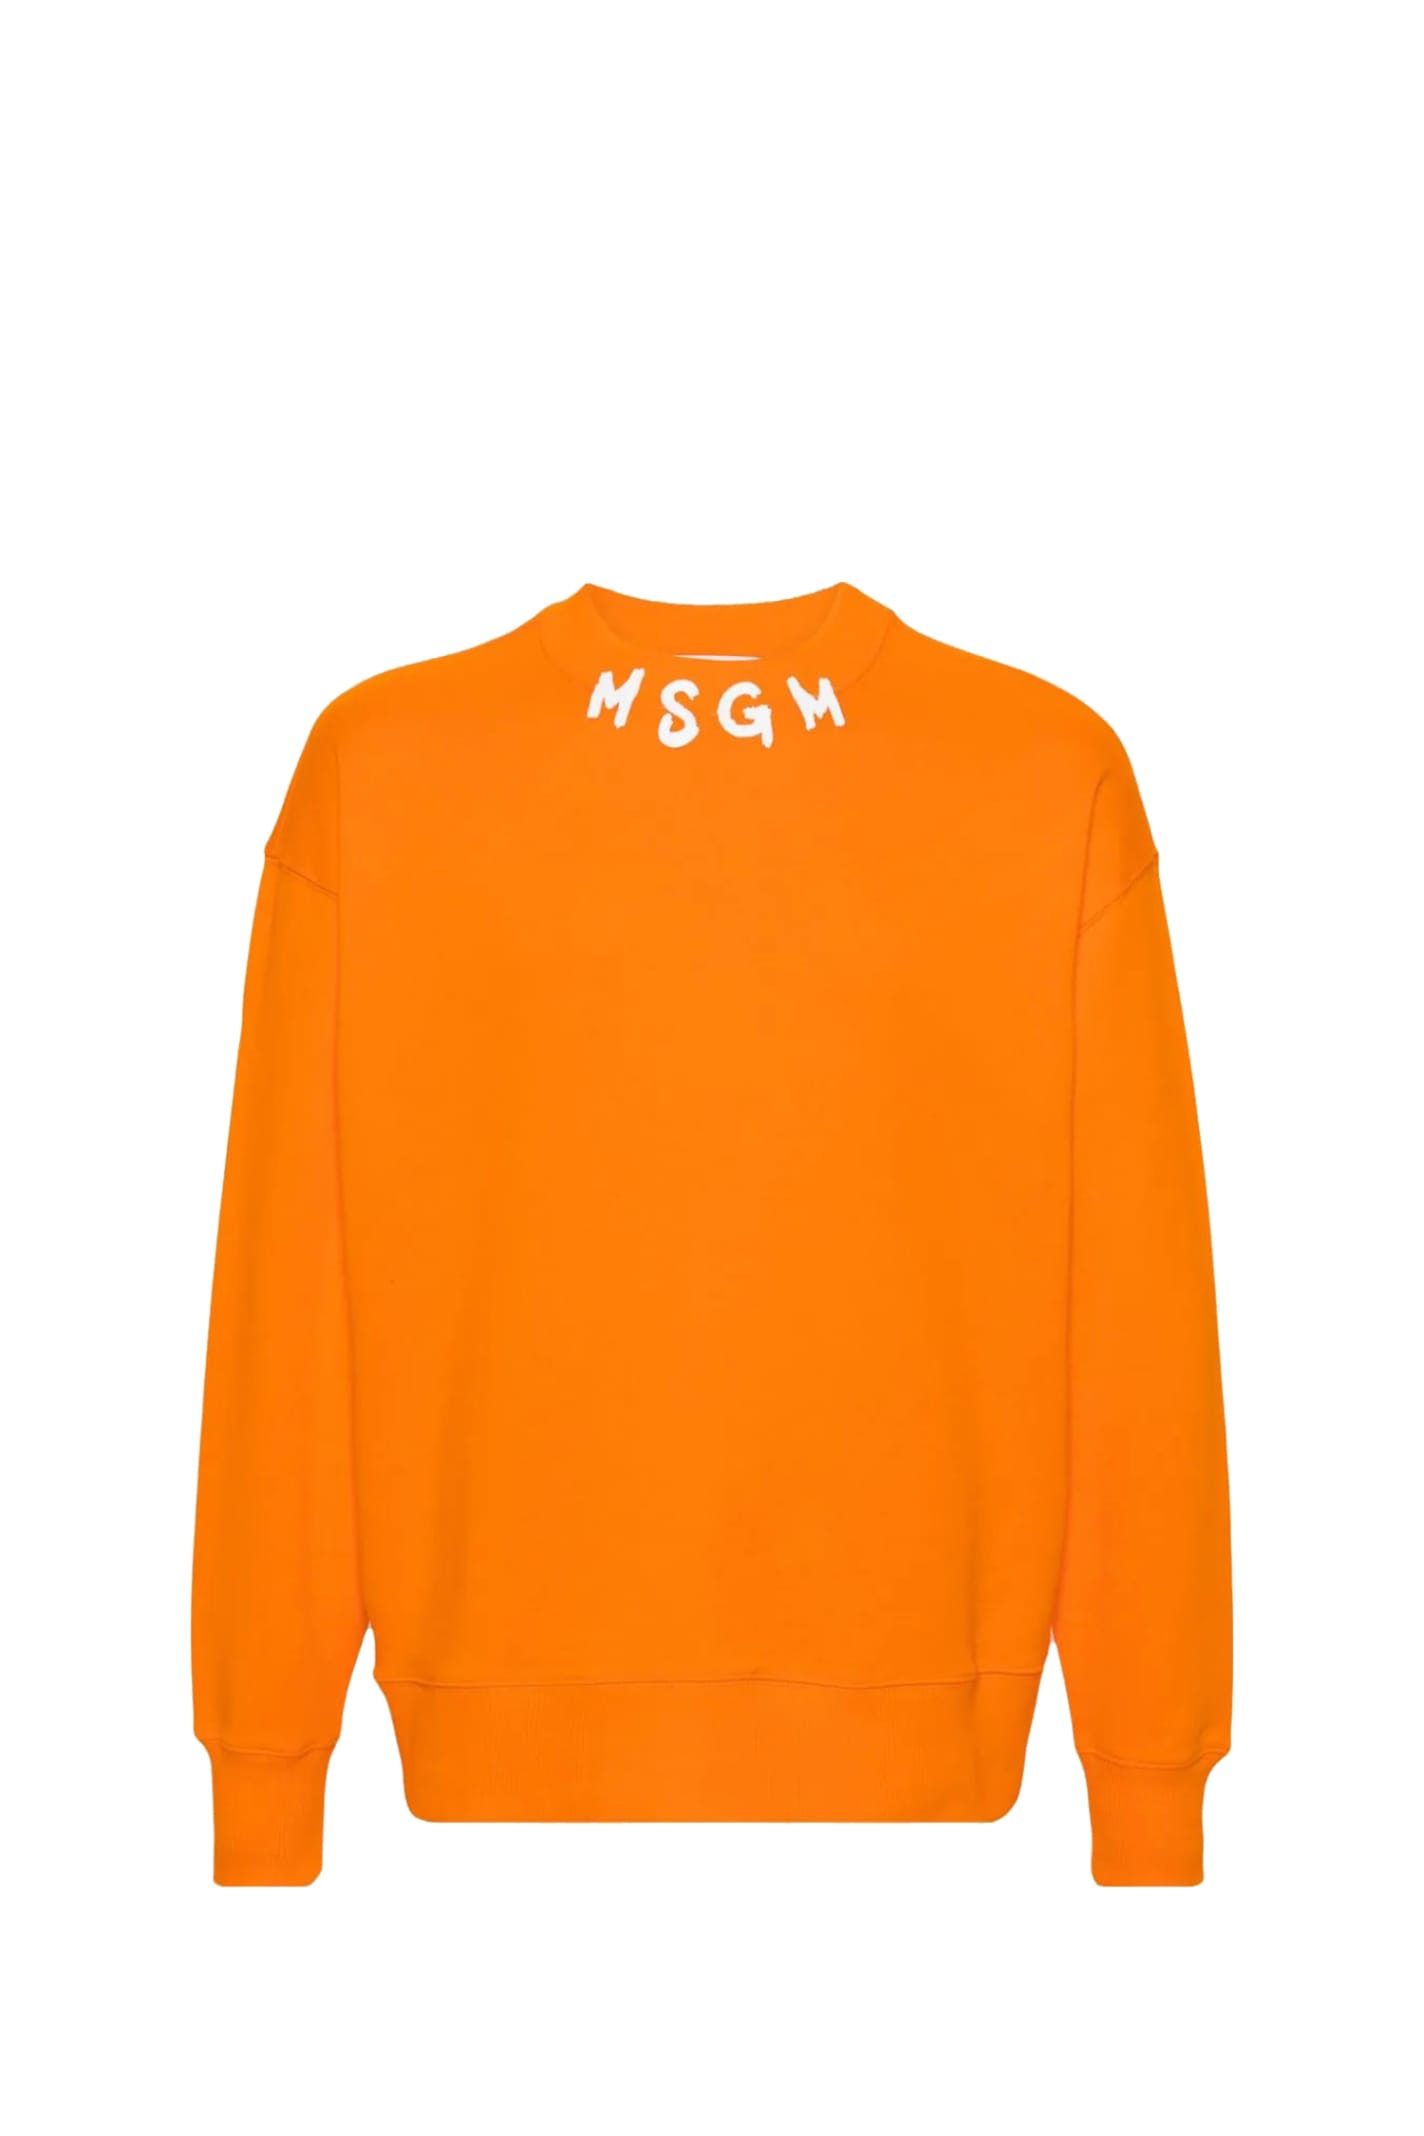 MSGM Sweatshirt